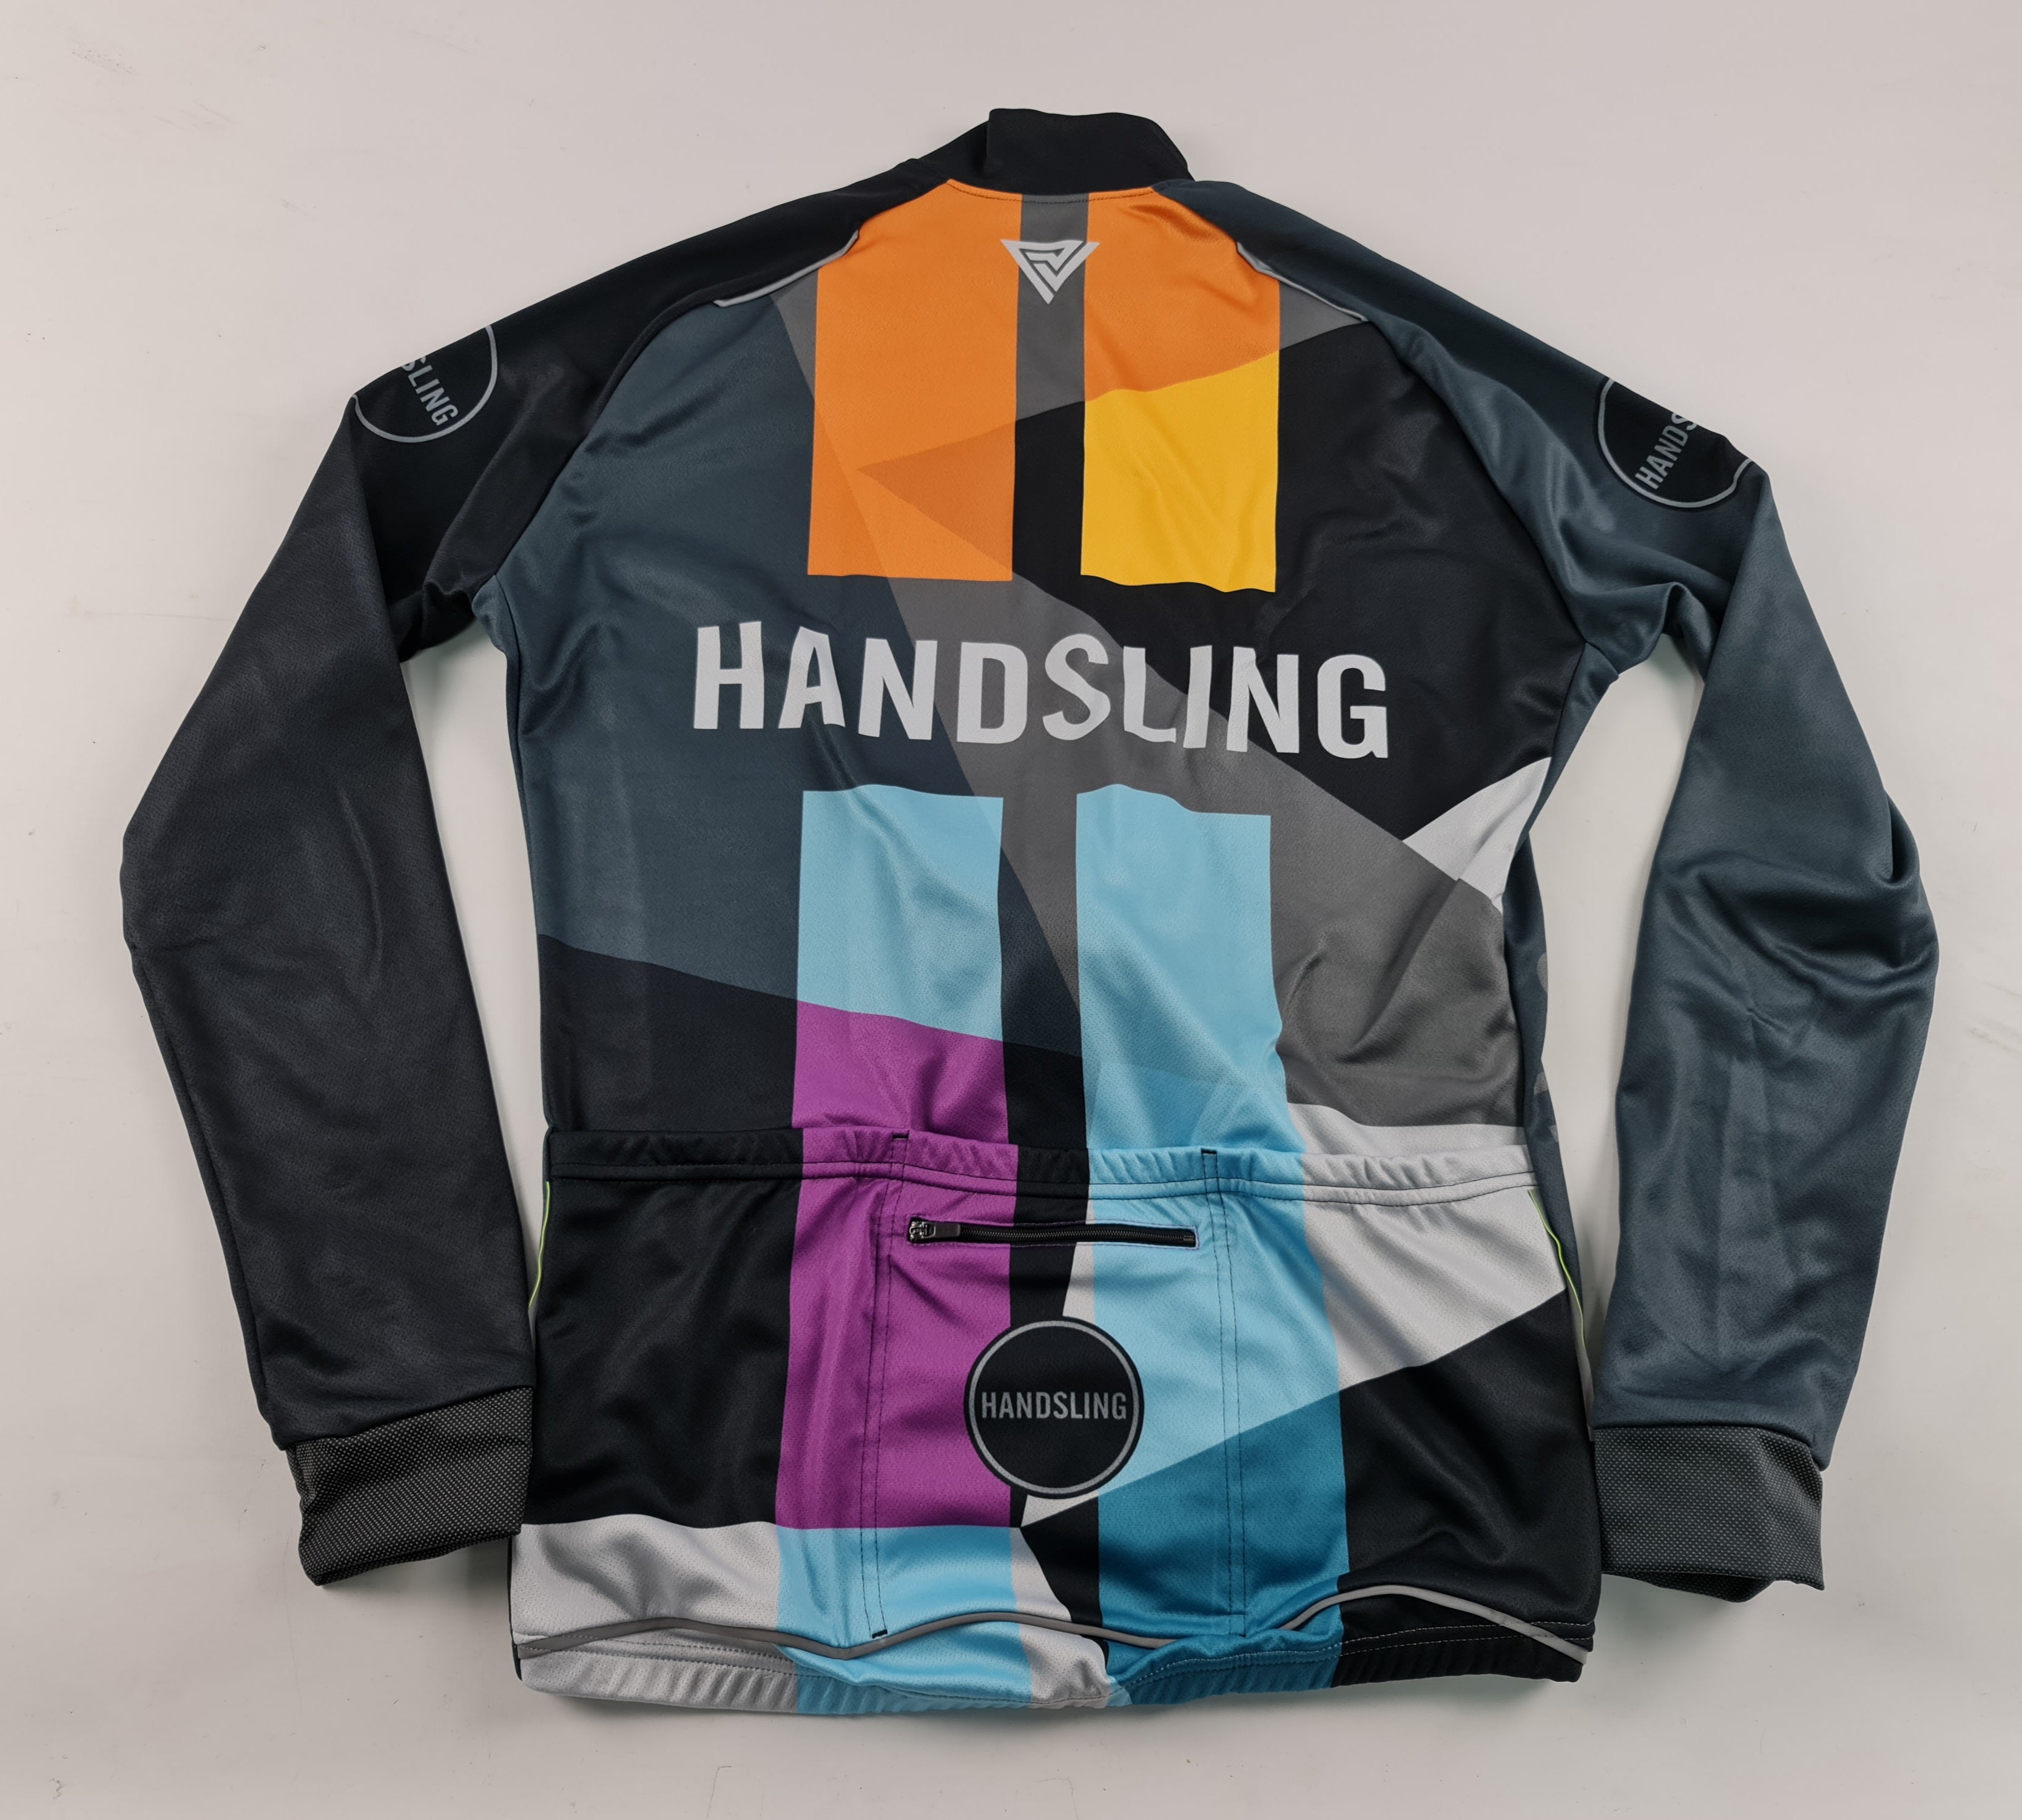 Handsling Roubaix Long Sleeve Jersey